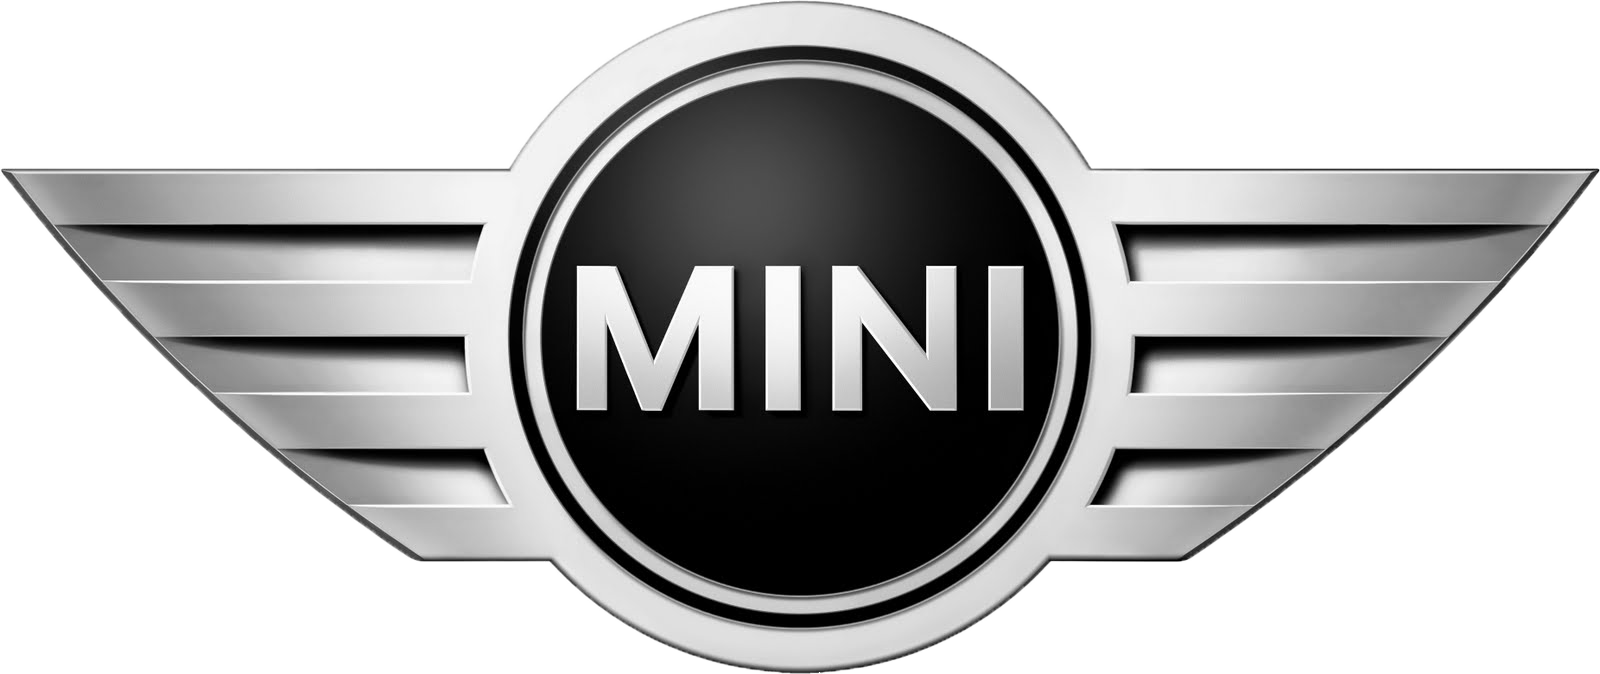 Mini Logo PNG Image